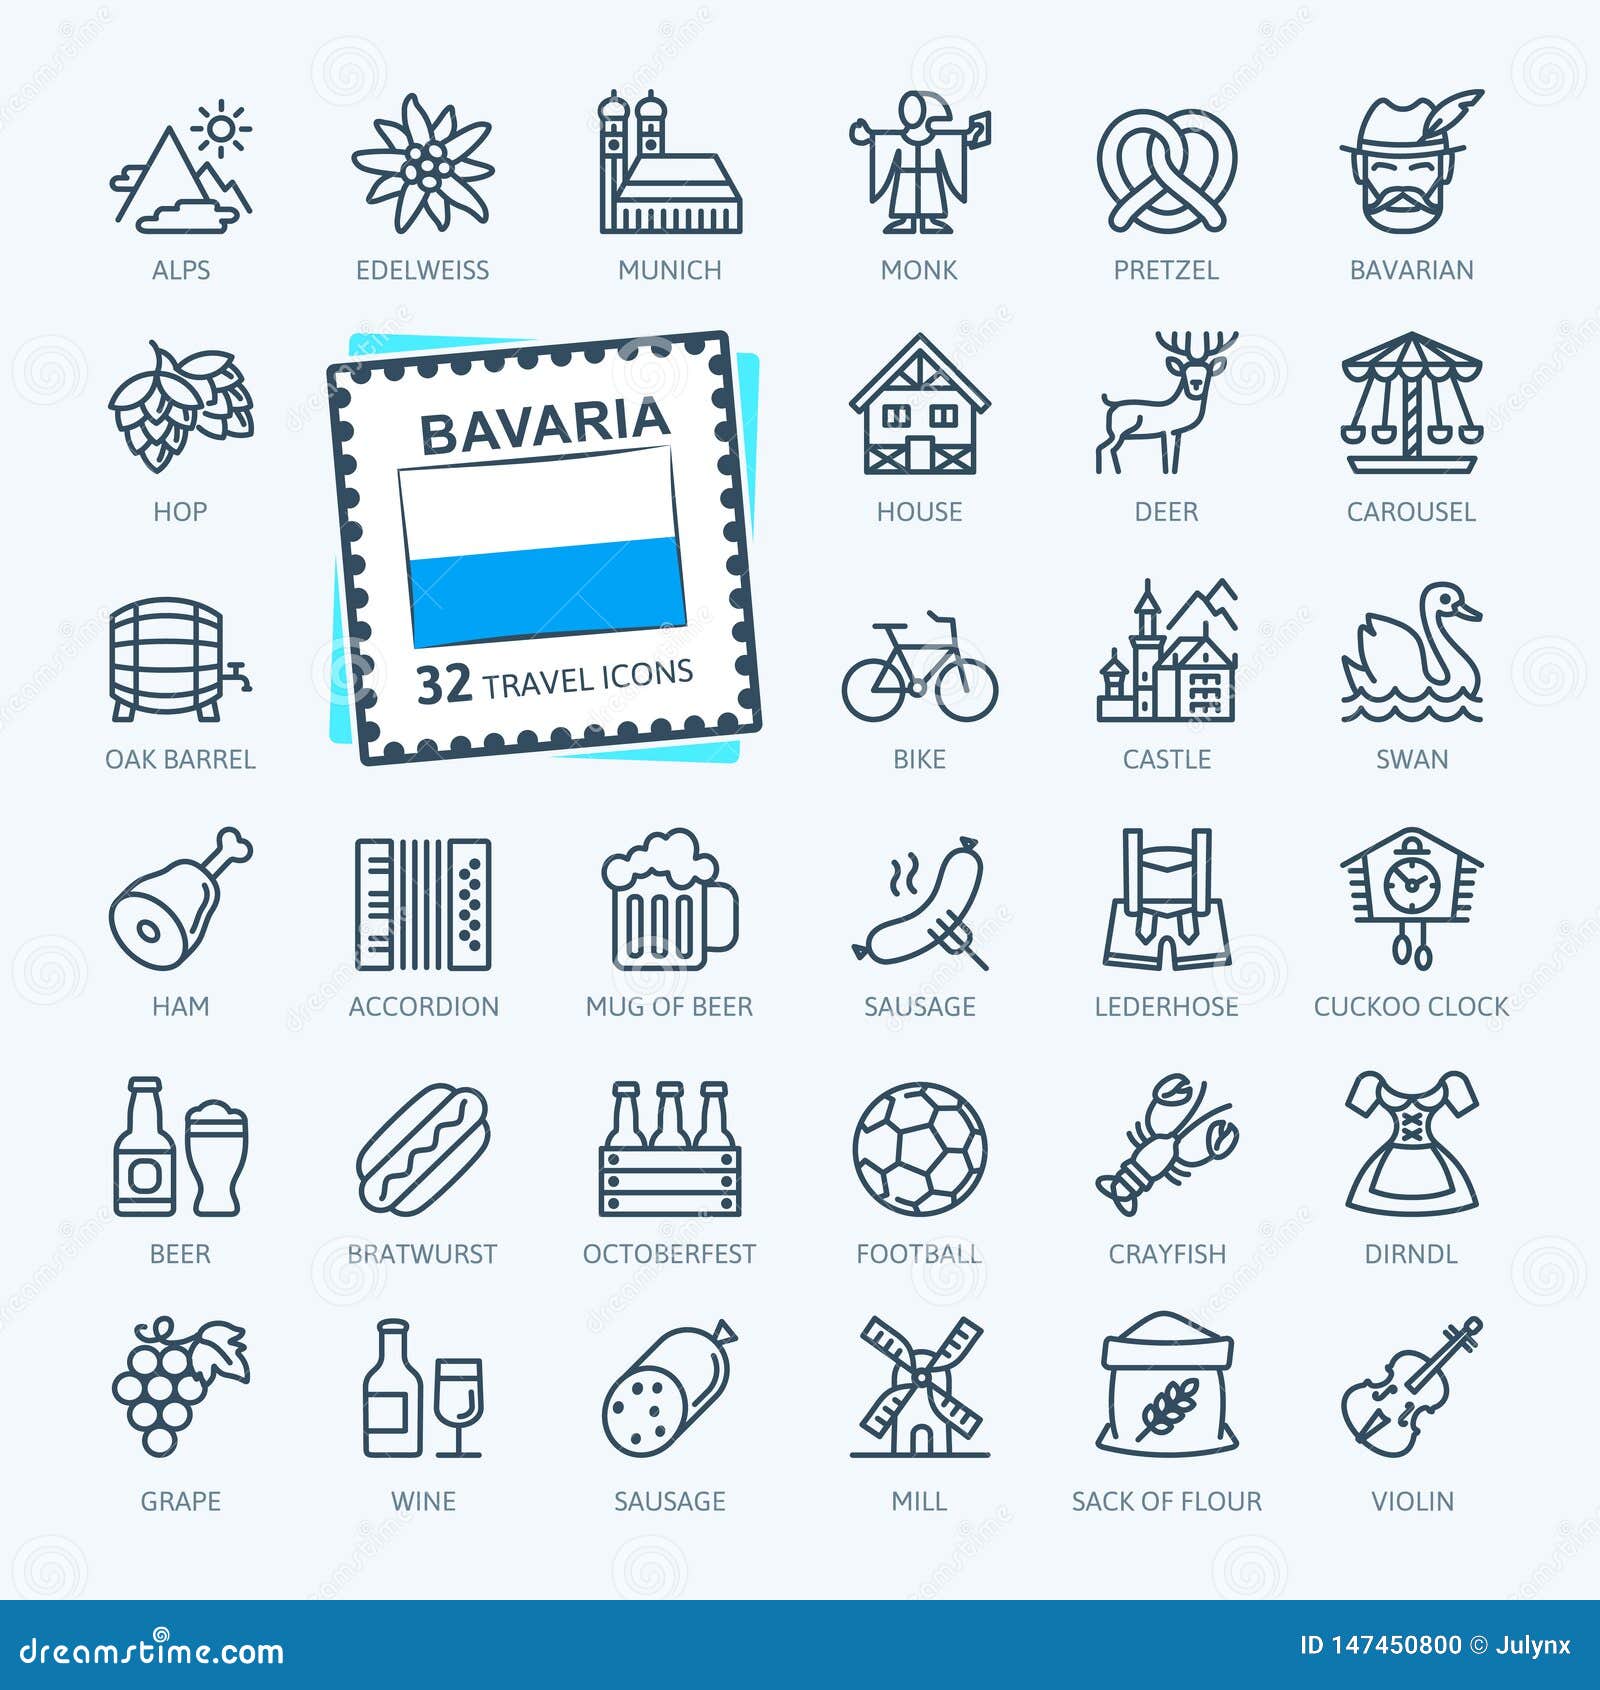 bavaria, bavarian, bayern - minimal thin line web icon set. outline icons collection